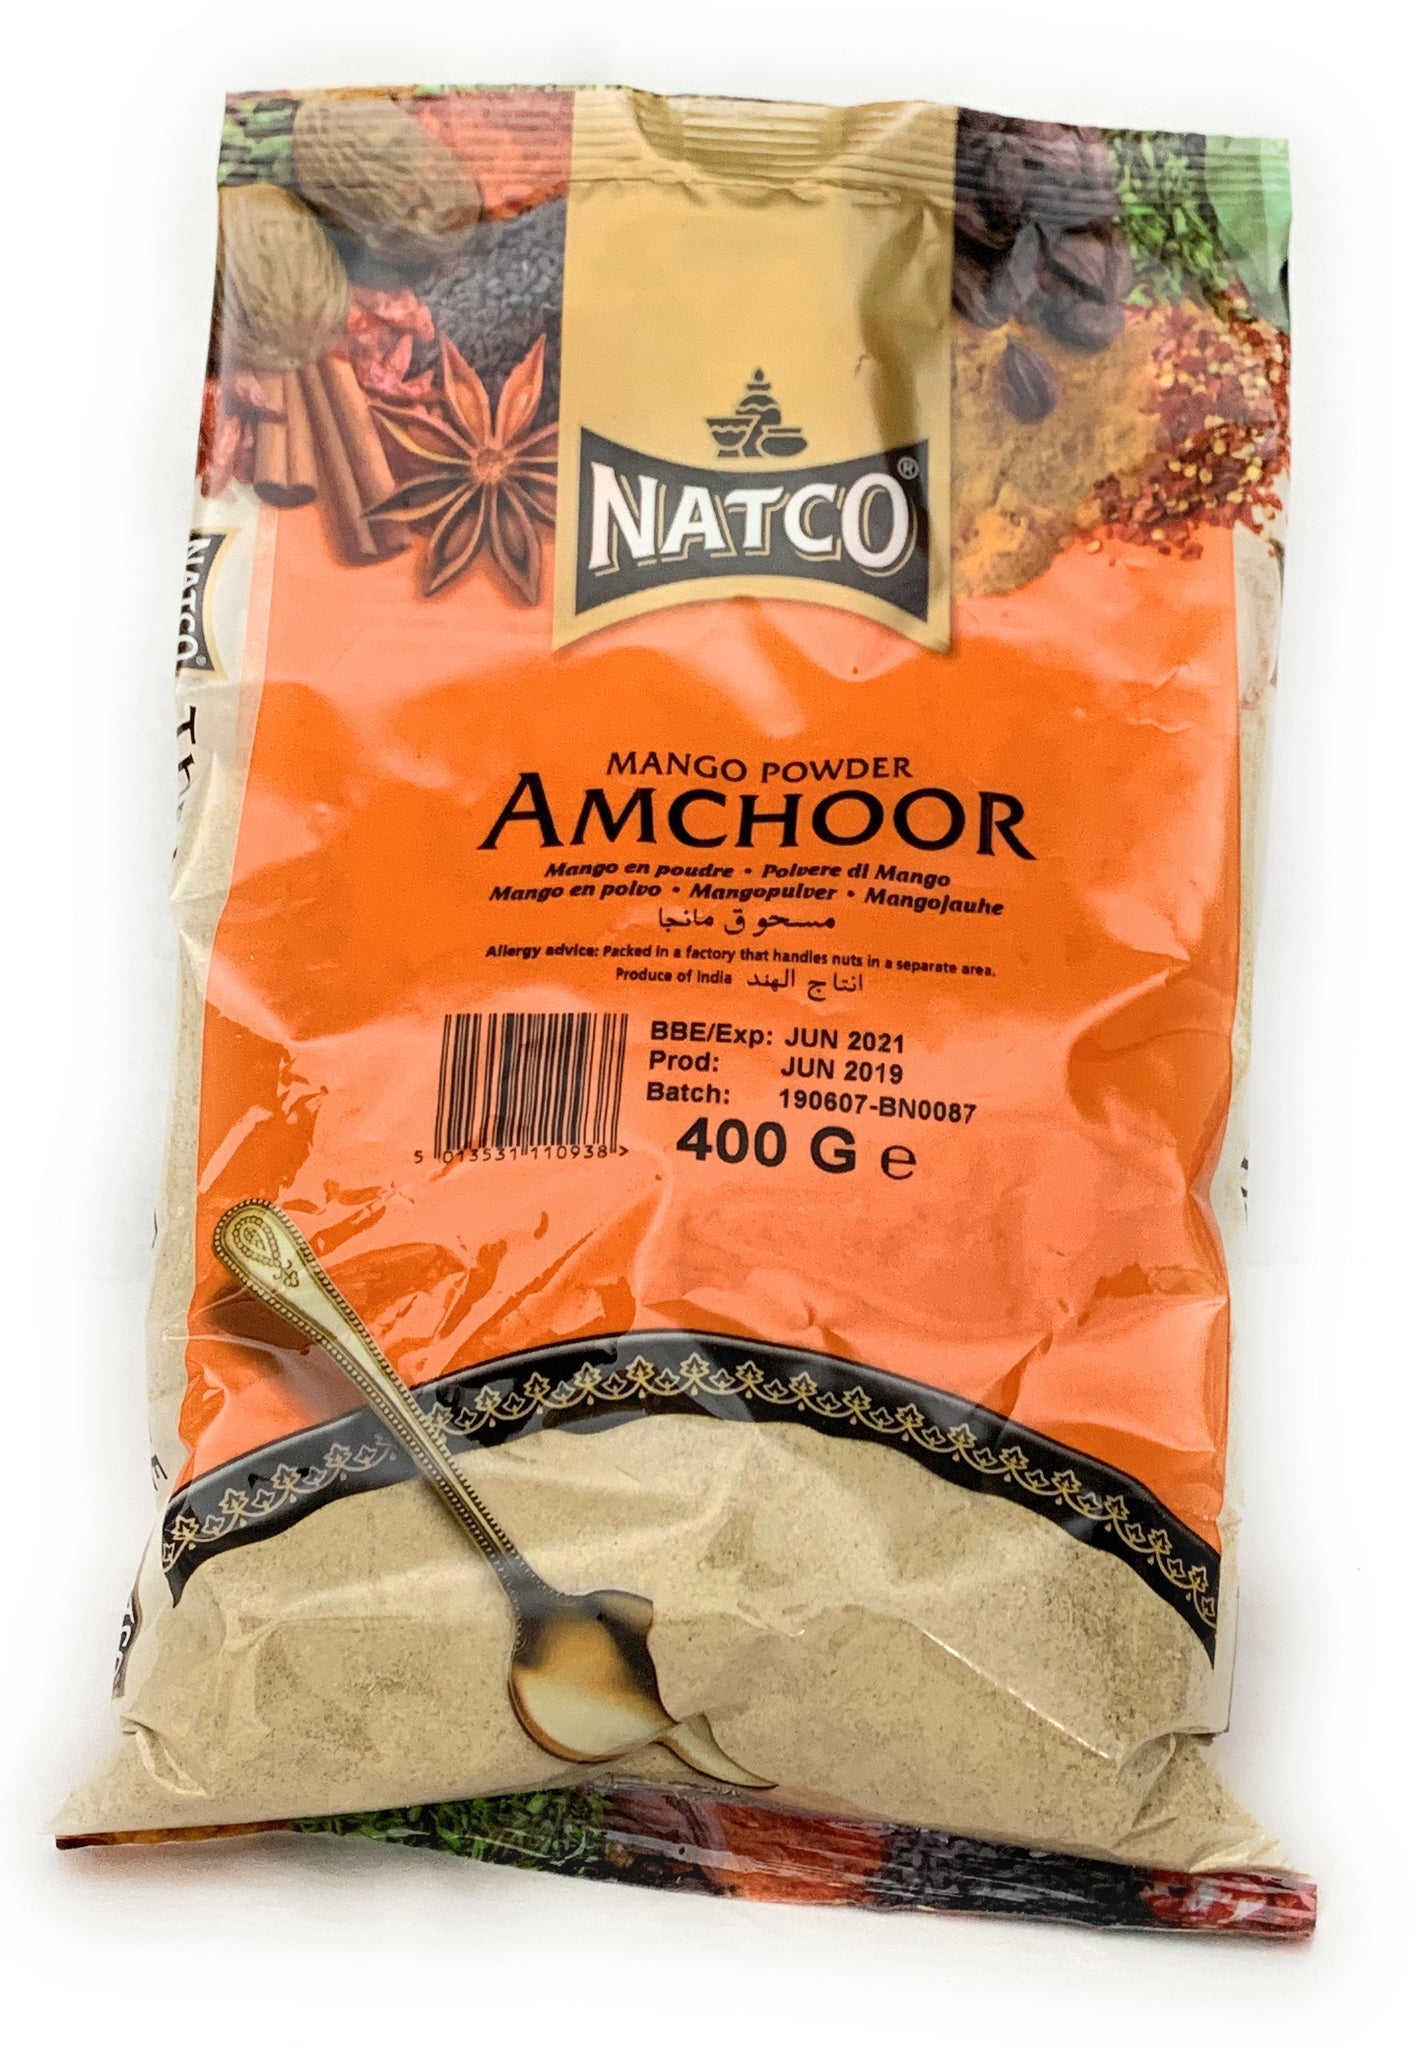 Natco Amchoor powder 400g